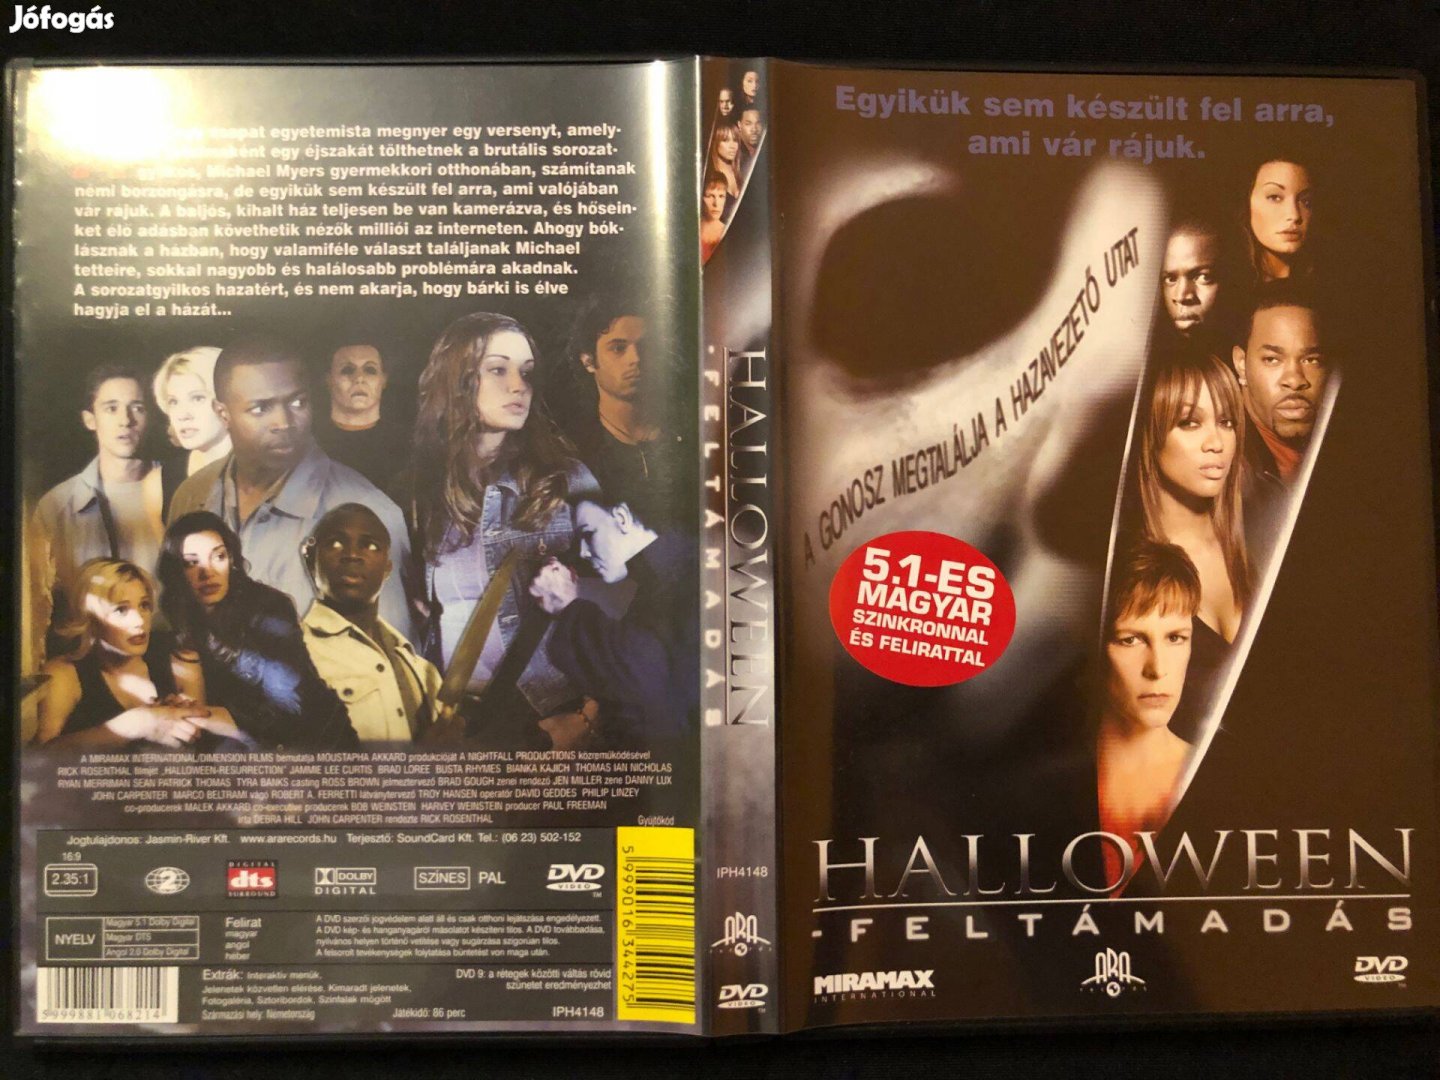 Halloween - Feltámadás (karcmentes, Jammie Lee Curtis) DVD